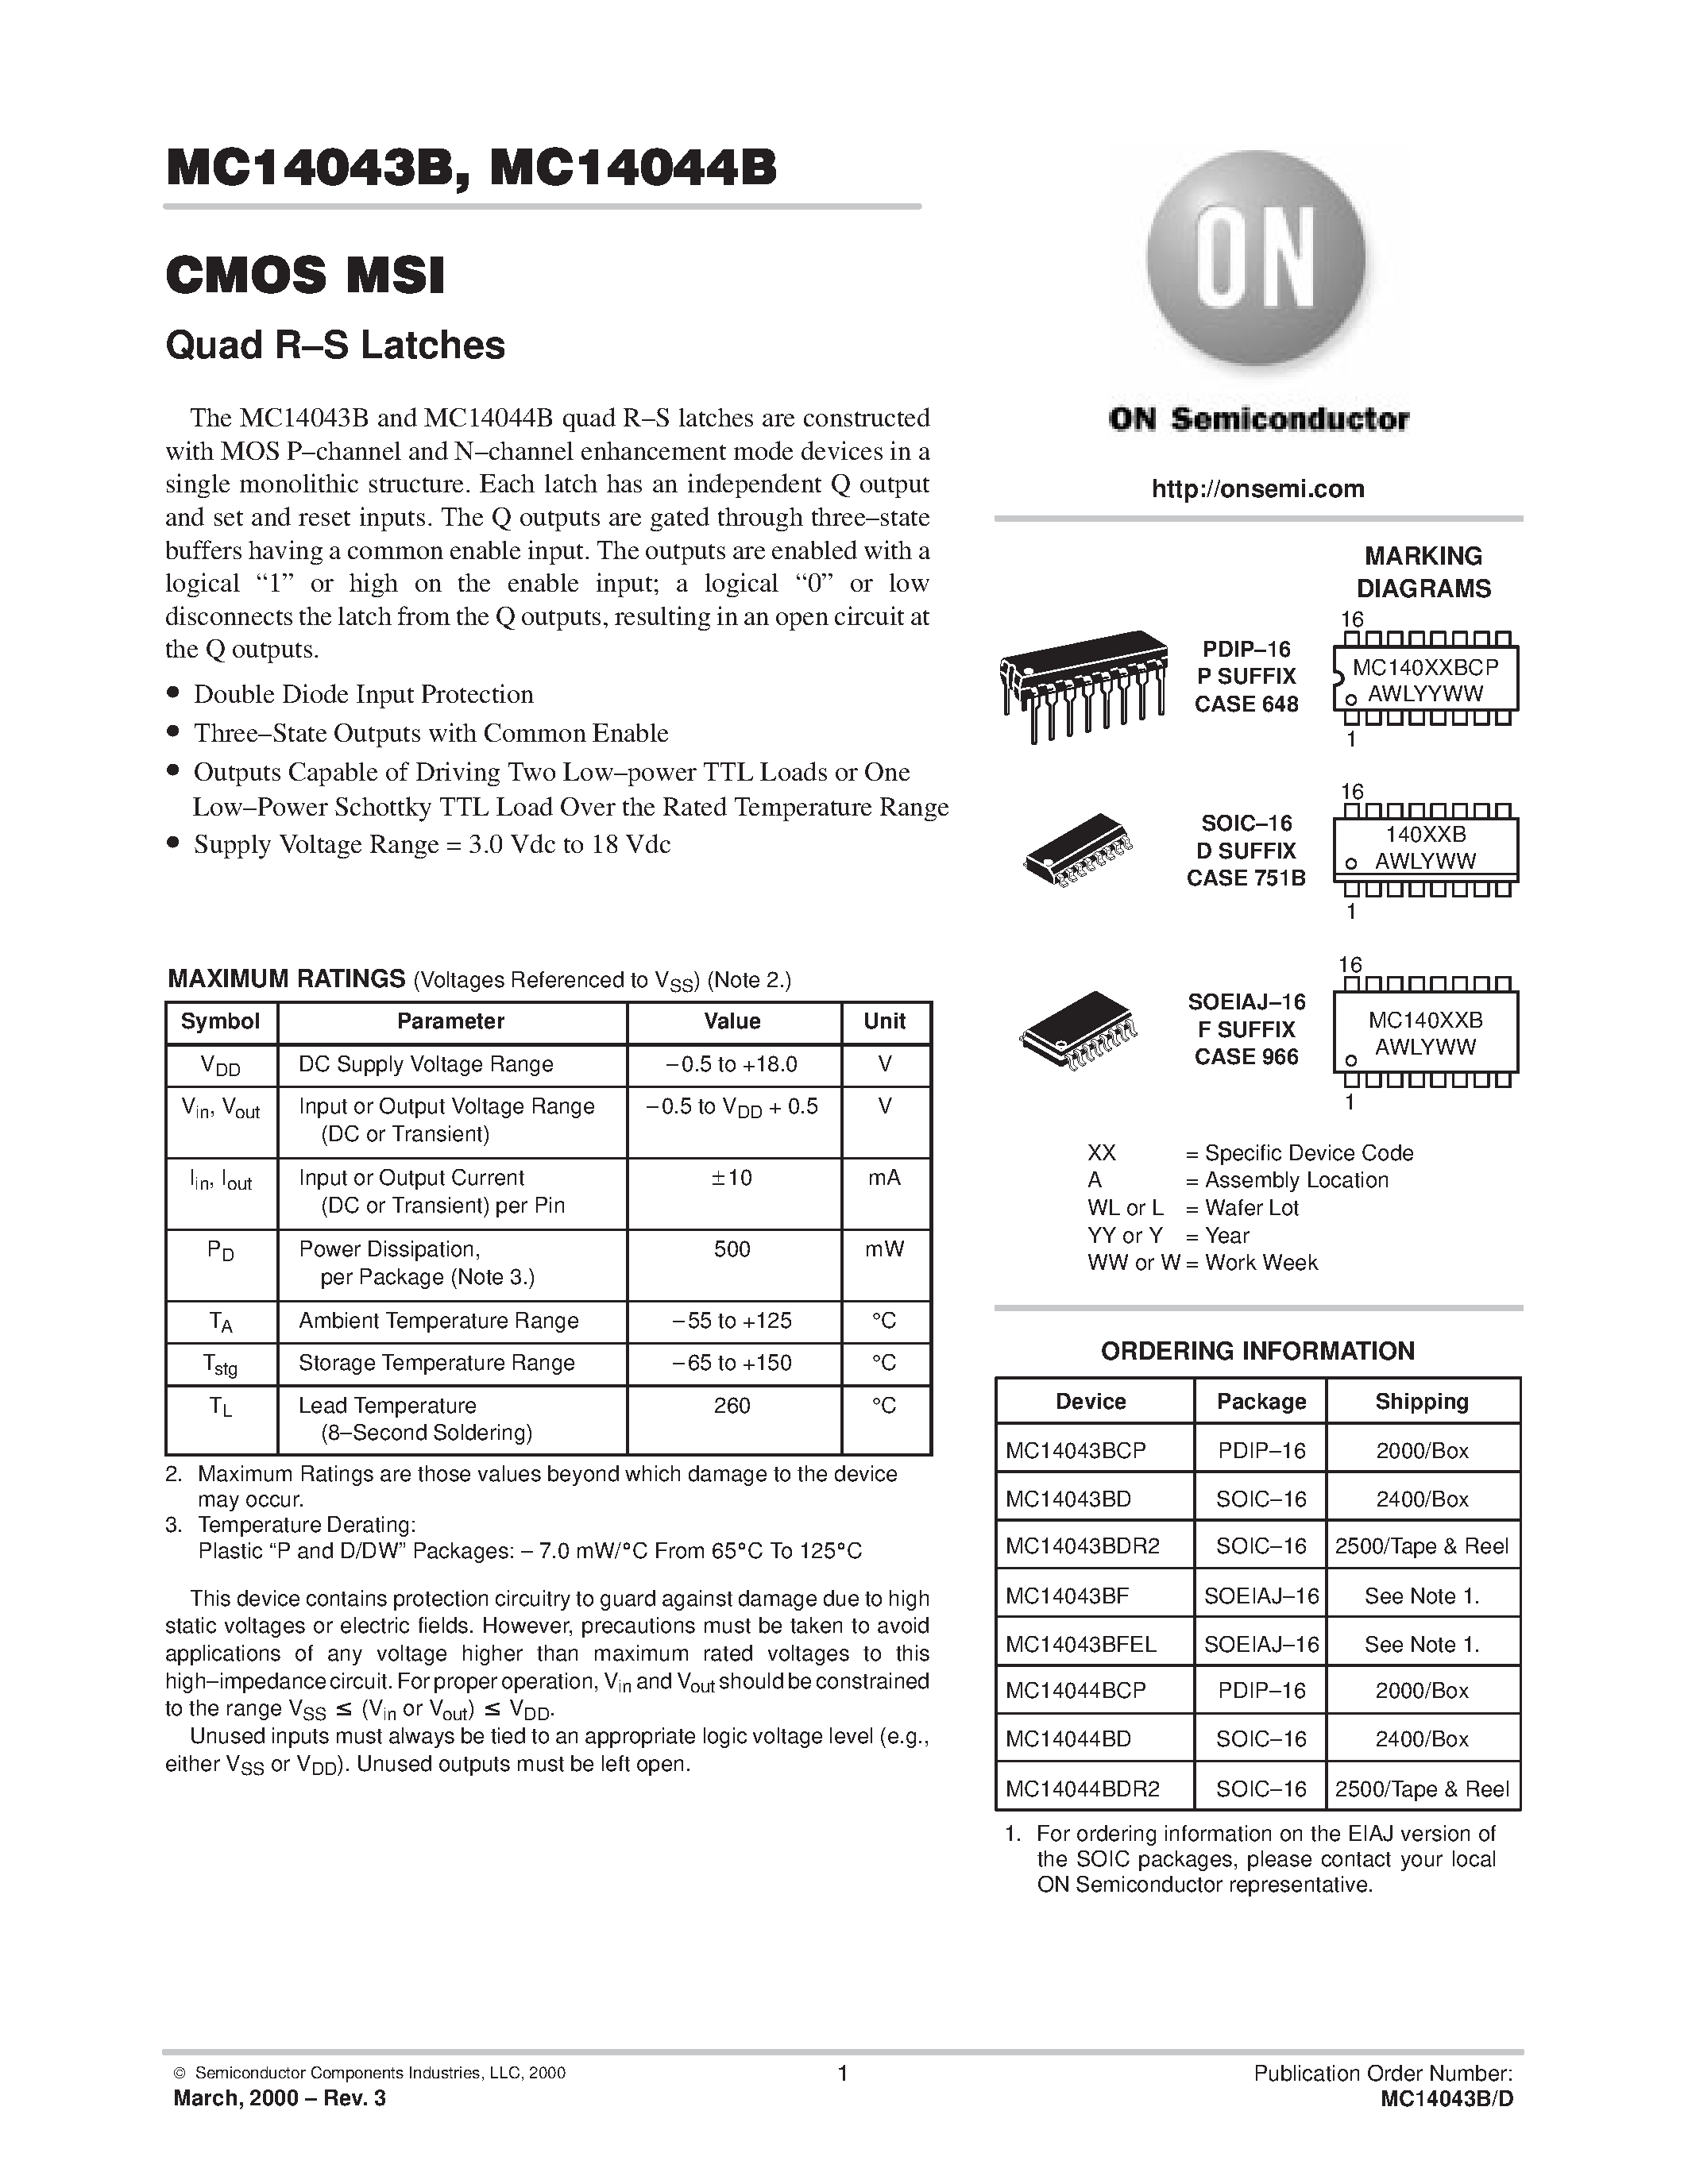 Даташит MC14043BF - CMOS MSI(Quad R-S Latches) страница 1